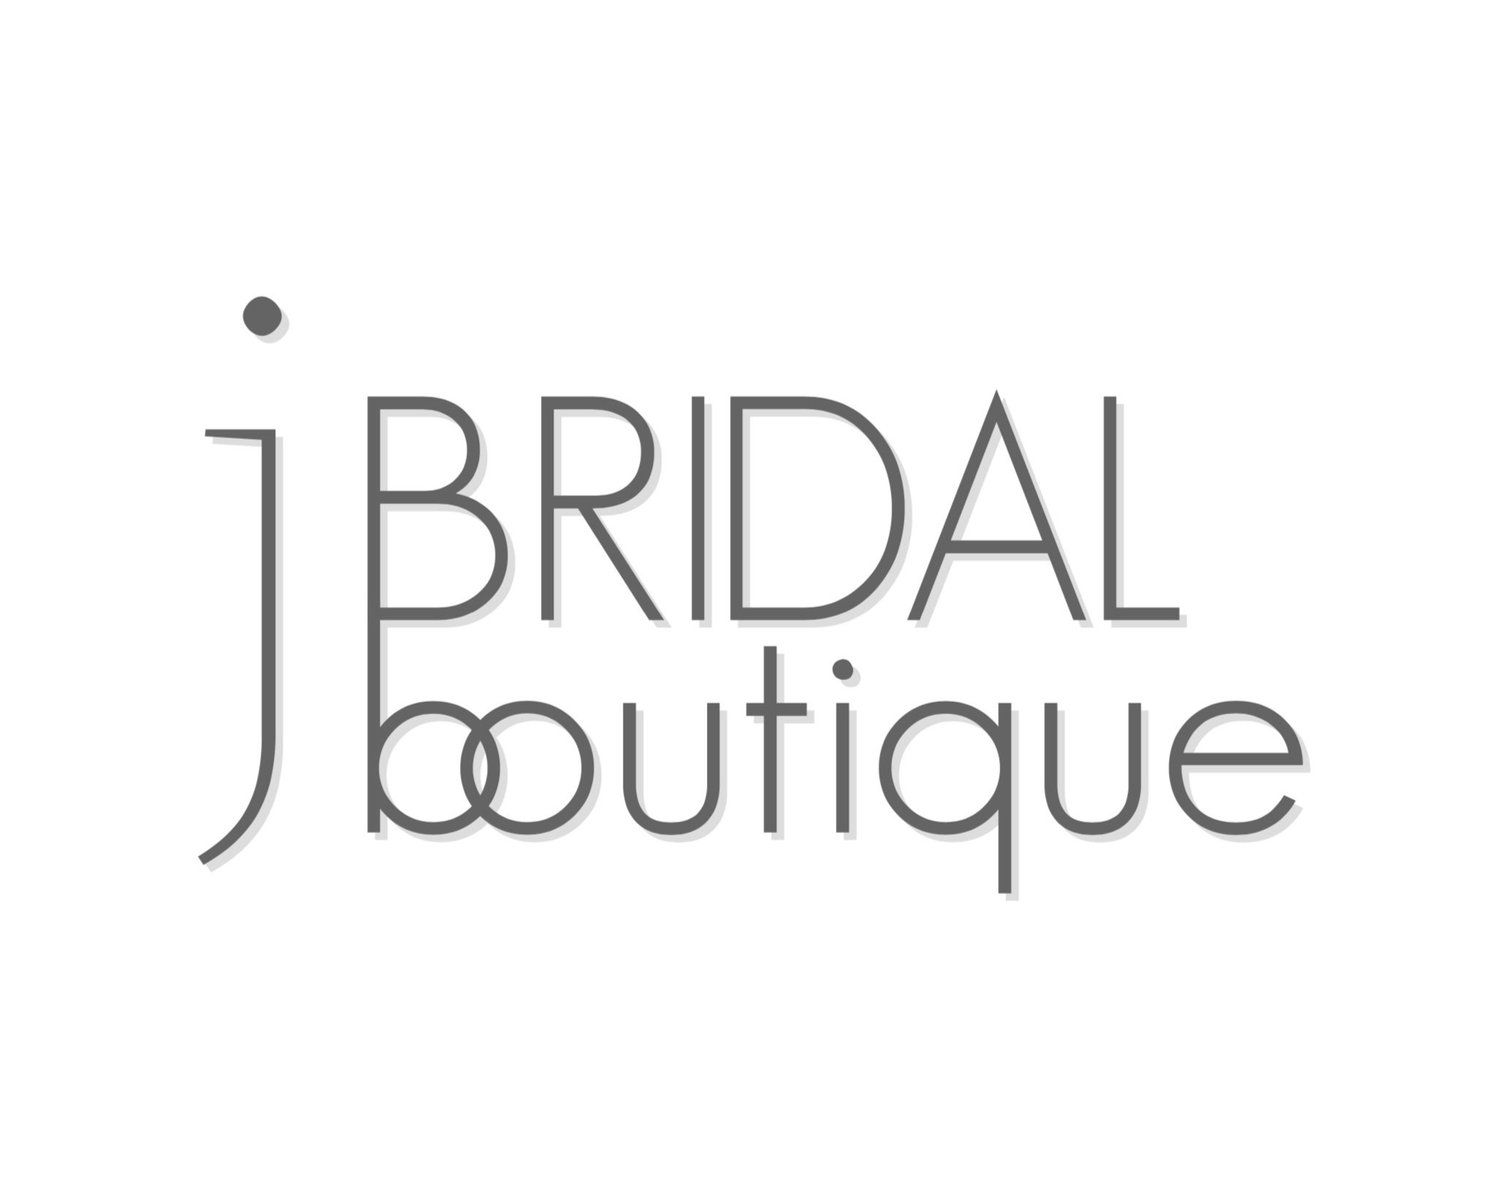 J BRIDAL BOUTIQUE | Arizona’s Best Bridal Shop in Tucson, Arizona | Exclusive Wedding Dresses 